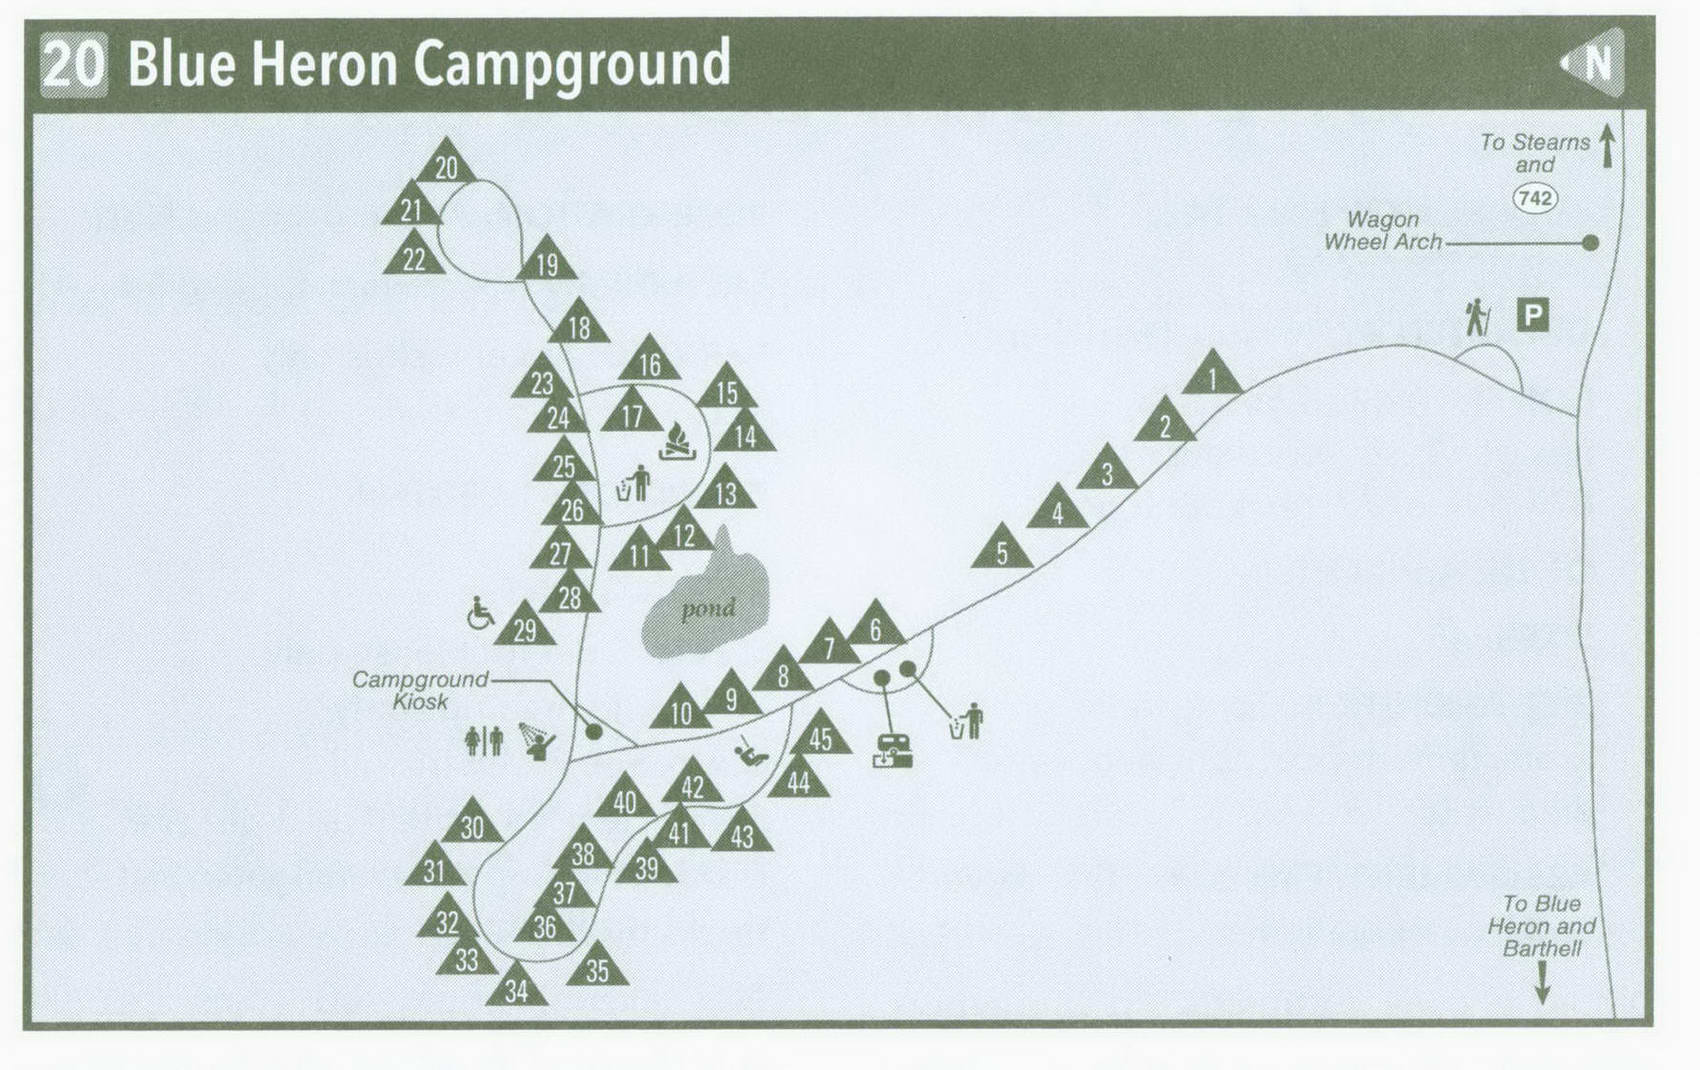 Plan of Blue Heron Campground